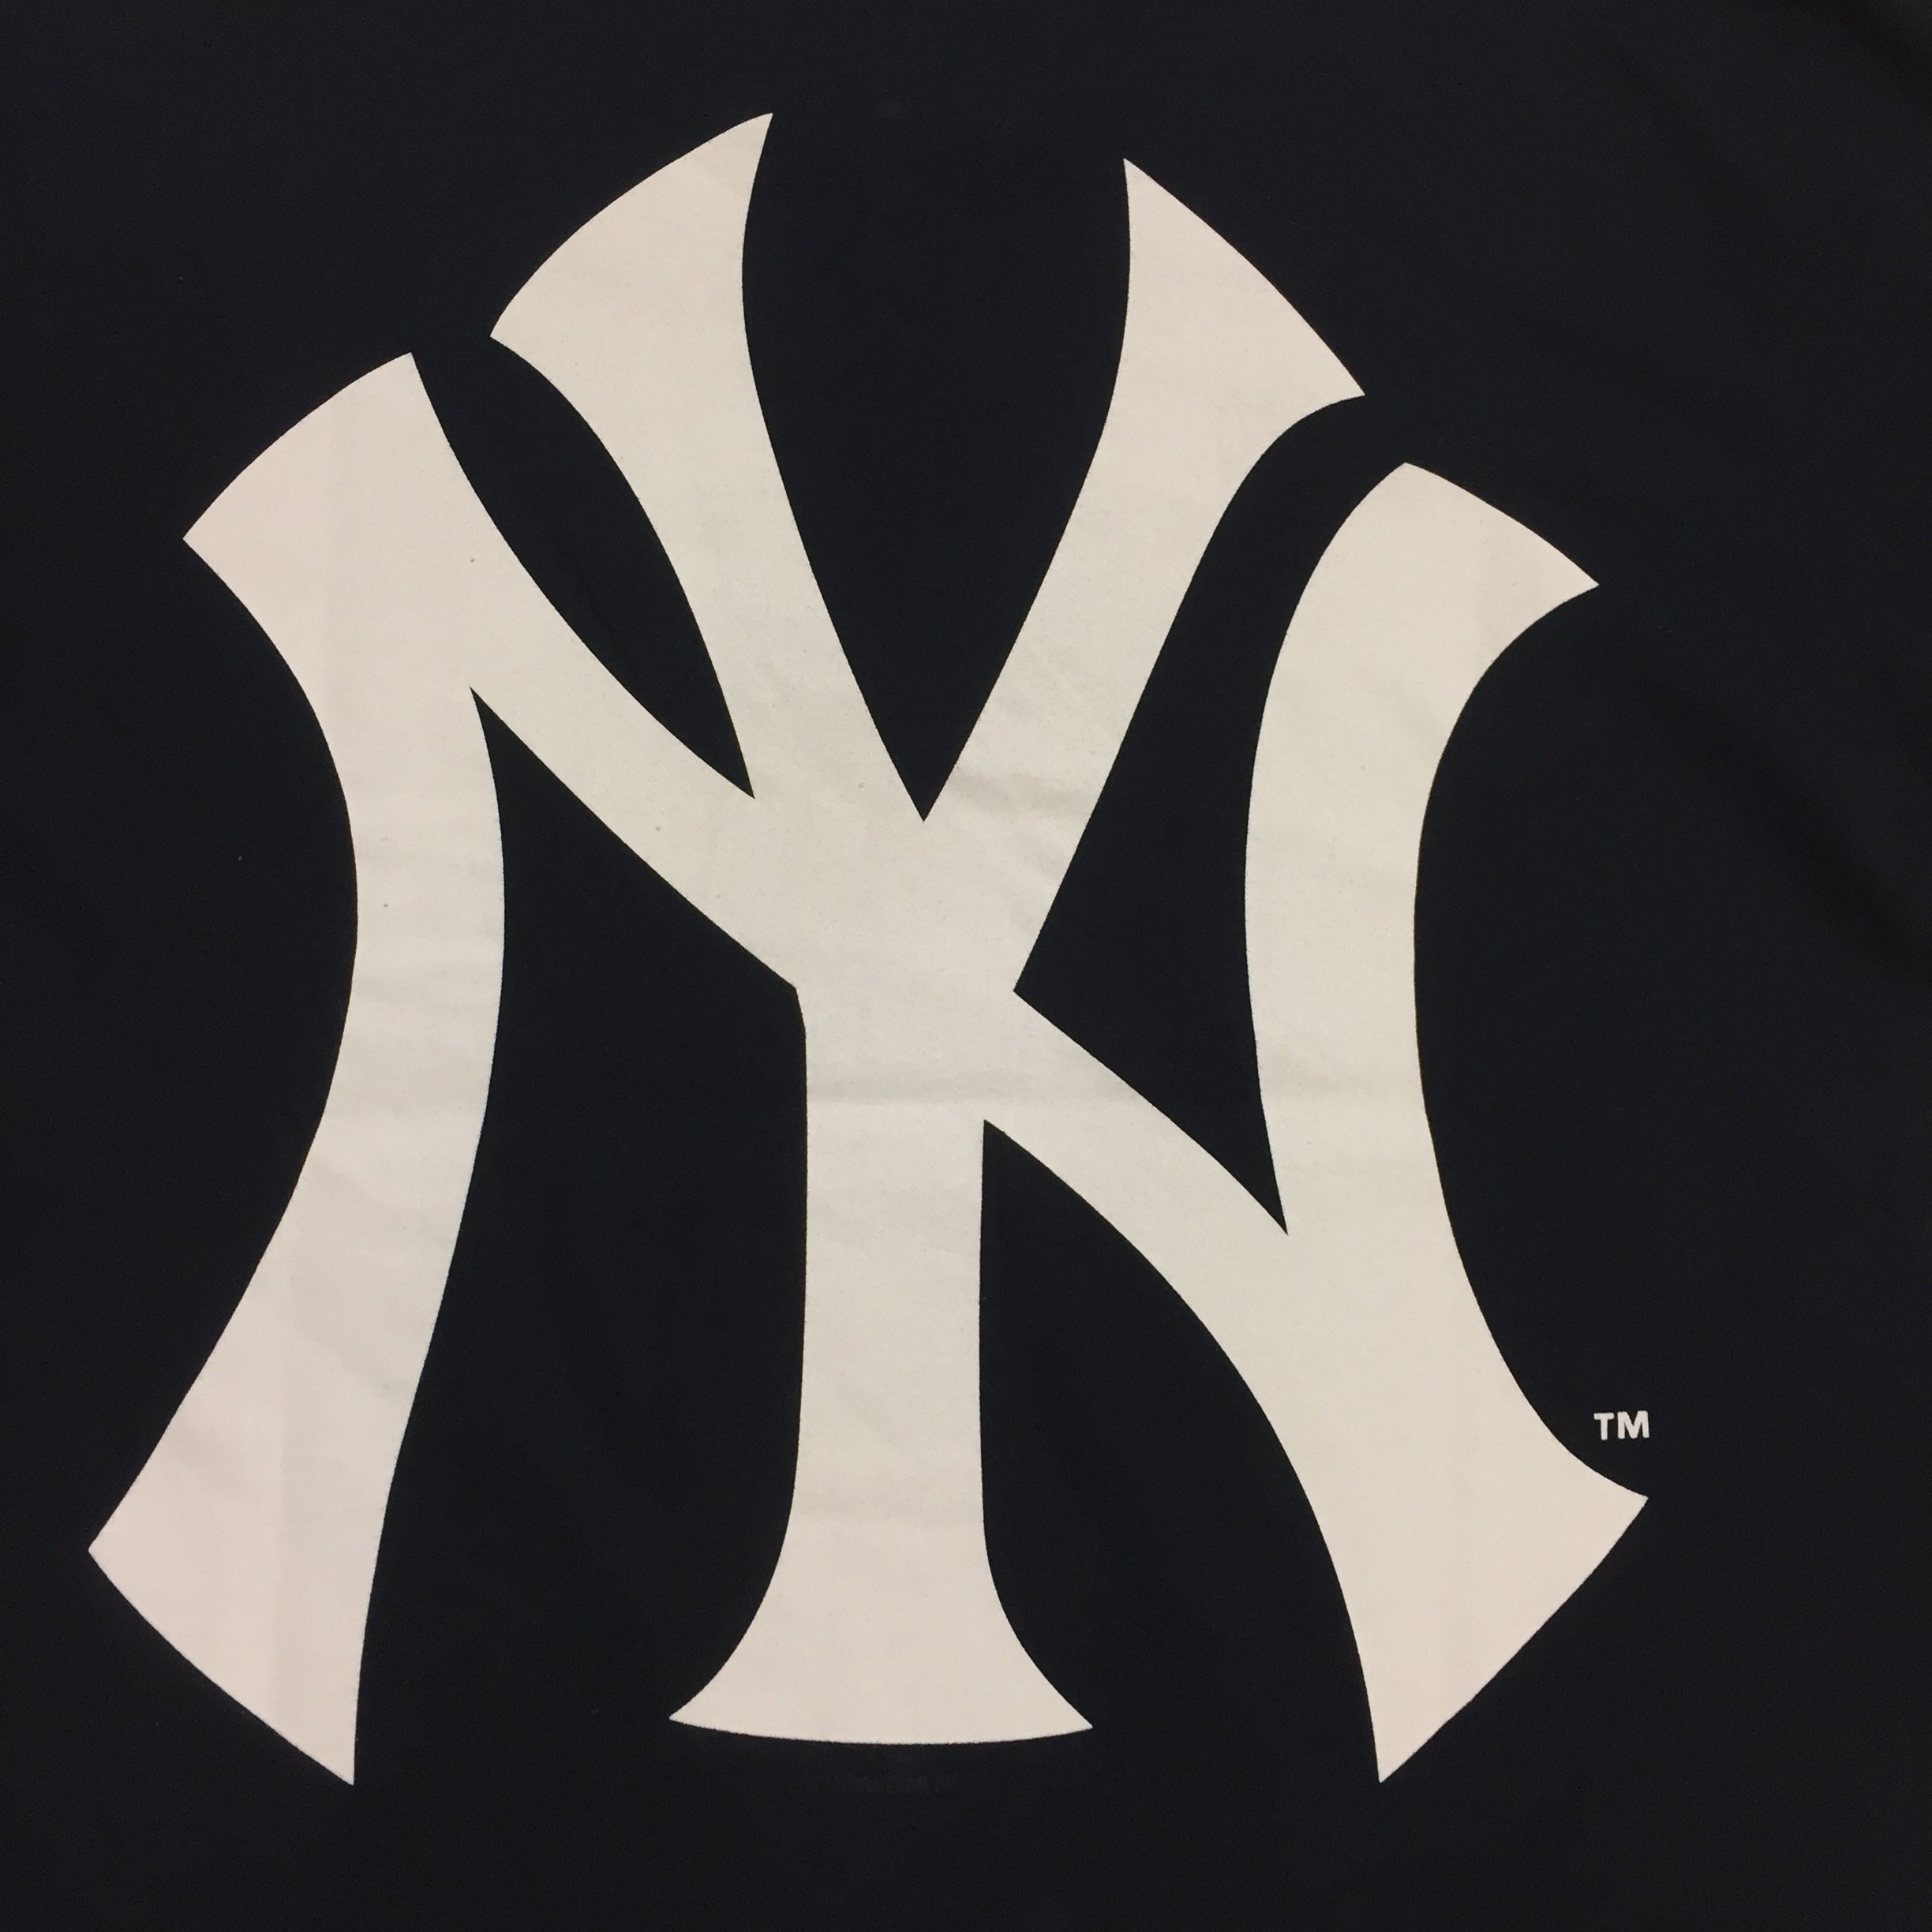 2015 Supreme Yankees Navy Box Logo Tee